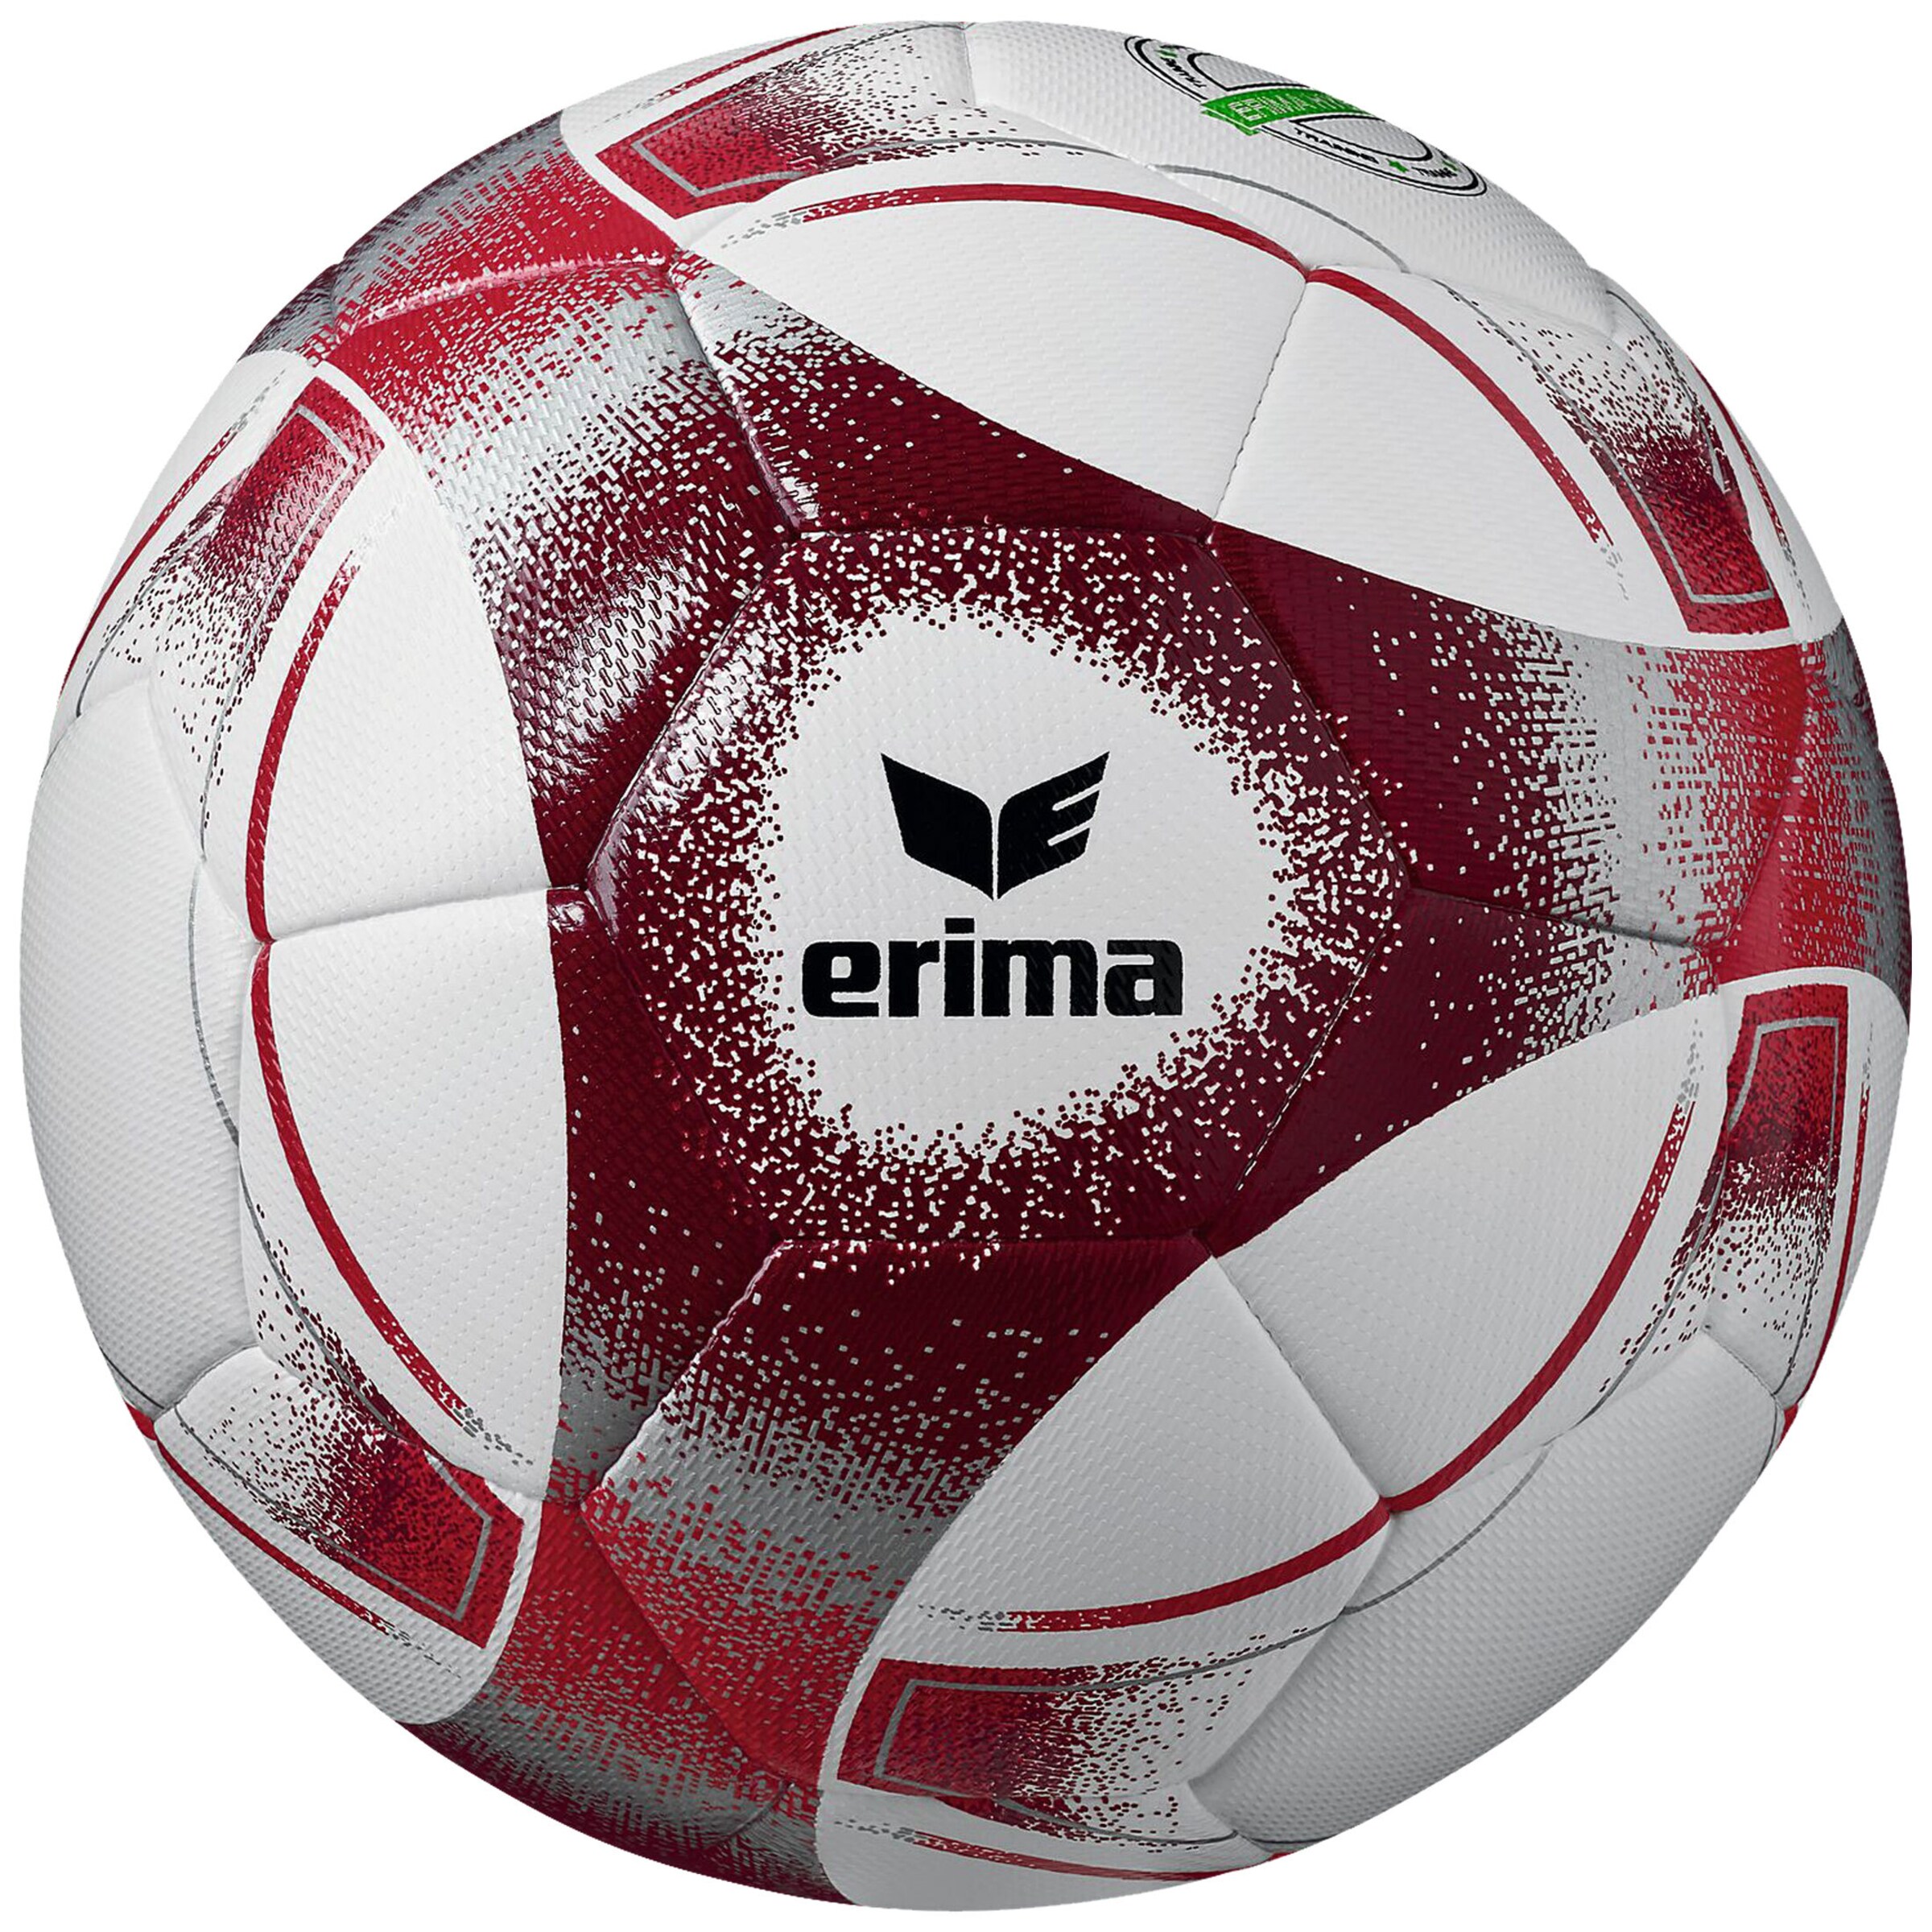 Männer Sportarten ERIMA Ball in Weiß - DH28460